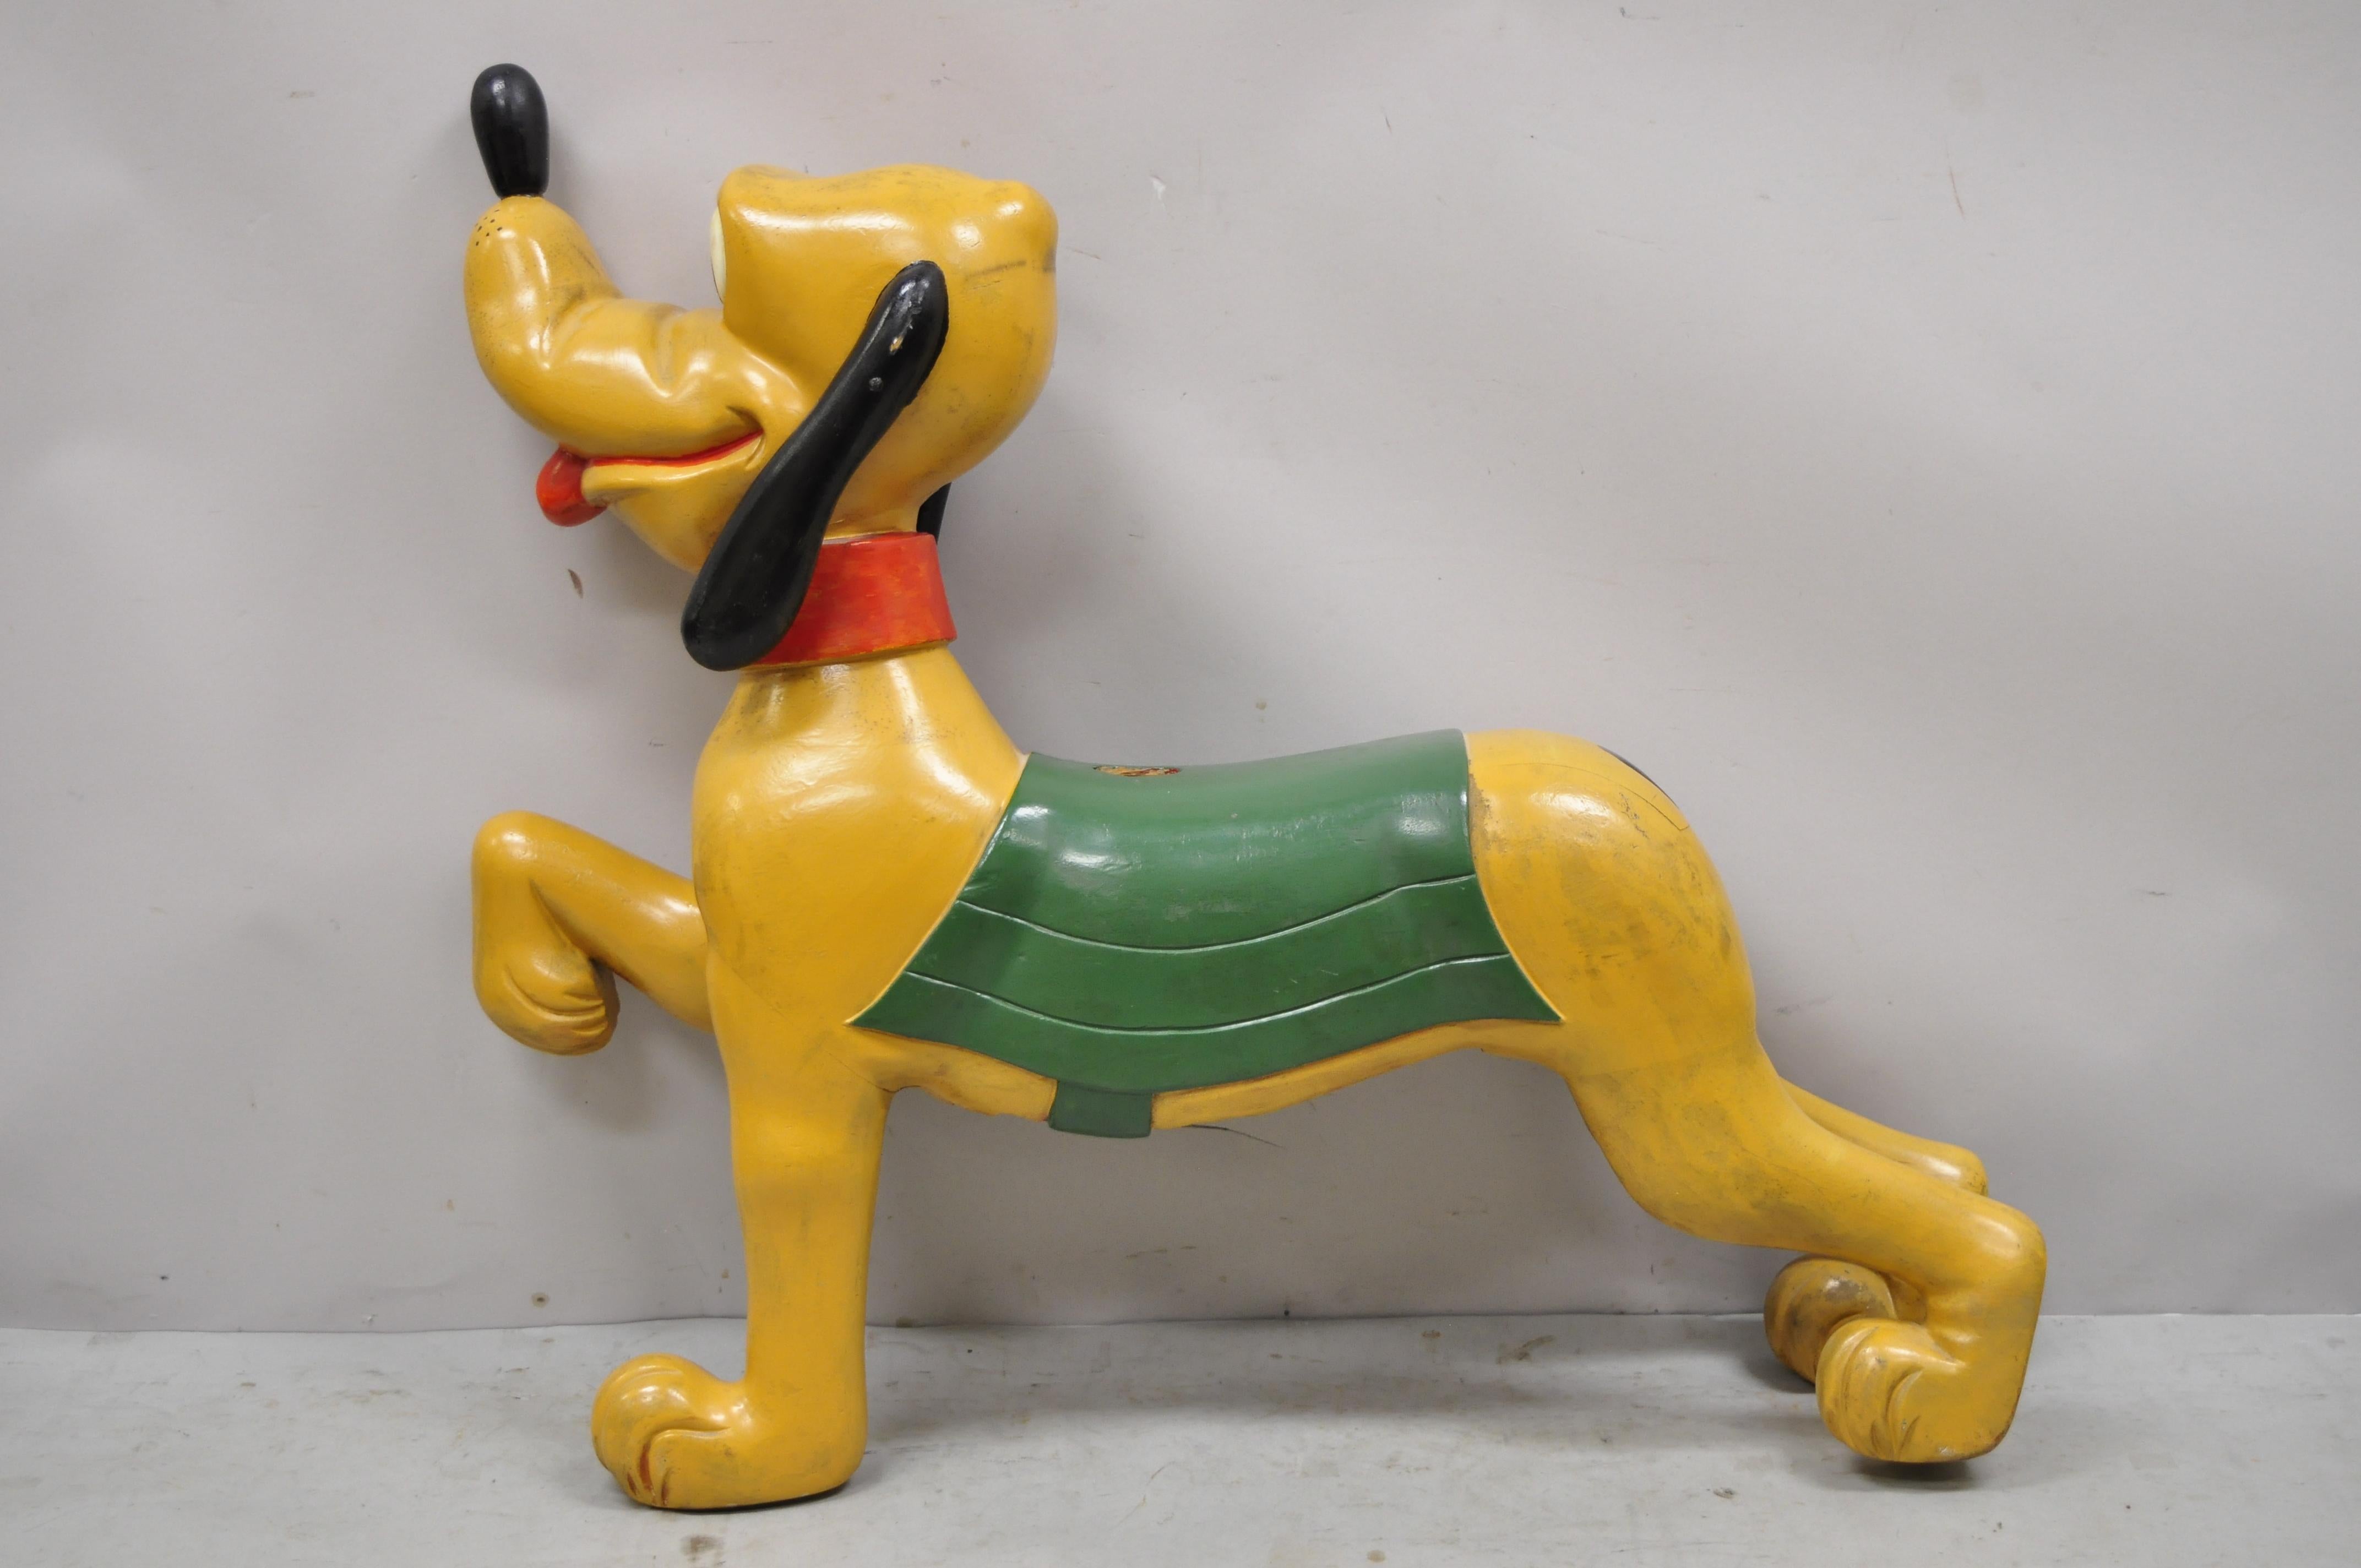 North American Vintage Carved Wood Disney World Pluto Dog Carousel Horse Ride Large Figure